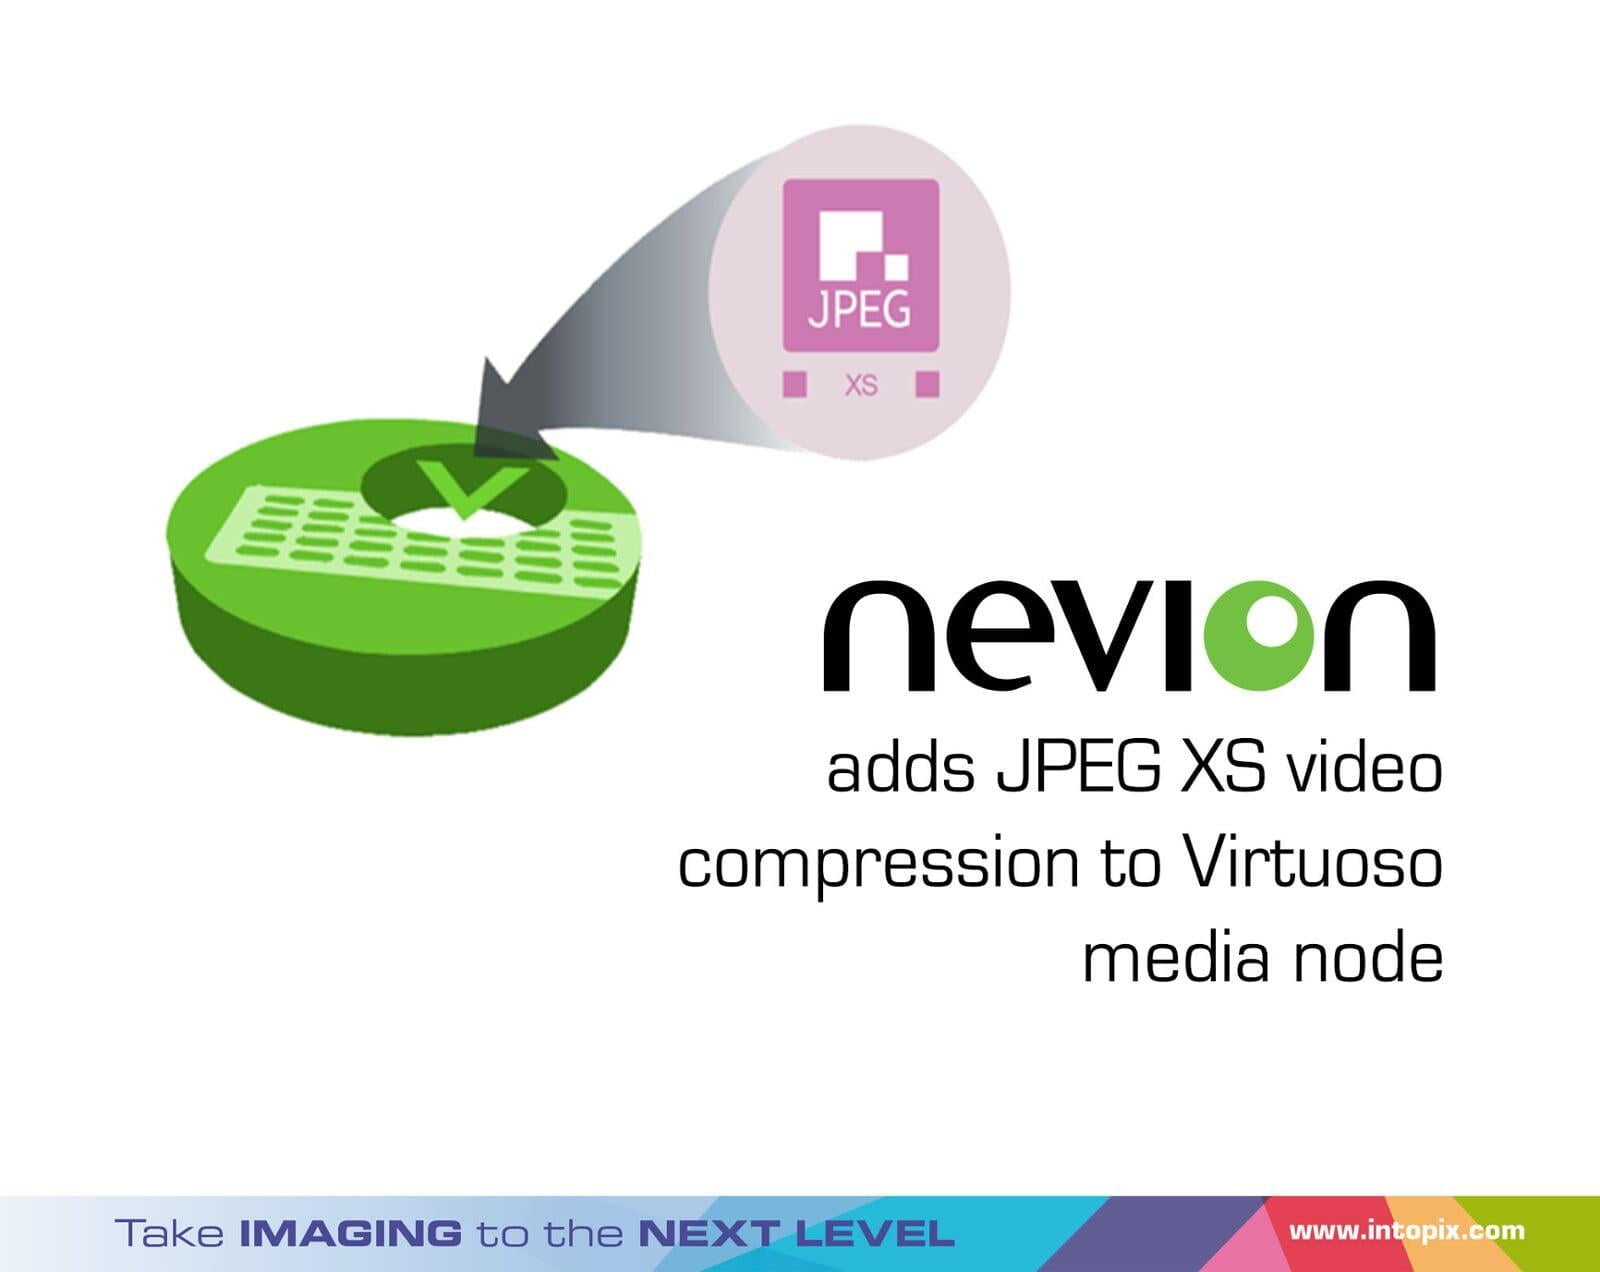 NevionはVirtuosoメディアノードにJPEG XSビデオ圧縮を追加                                